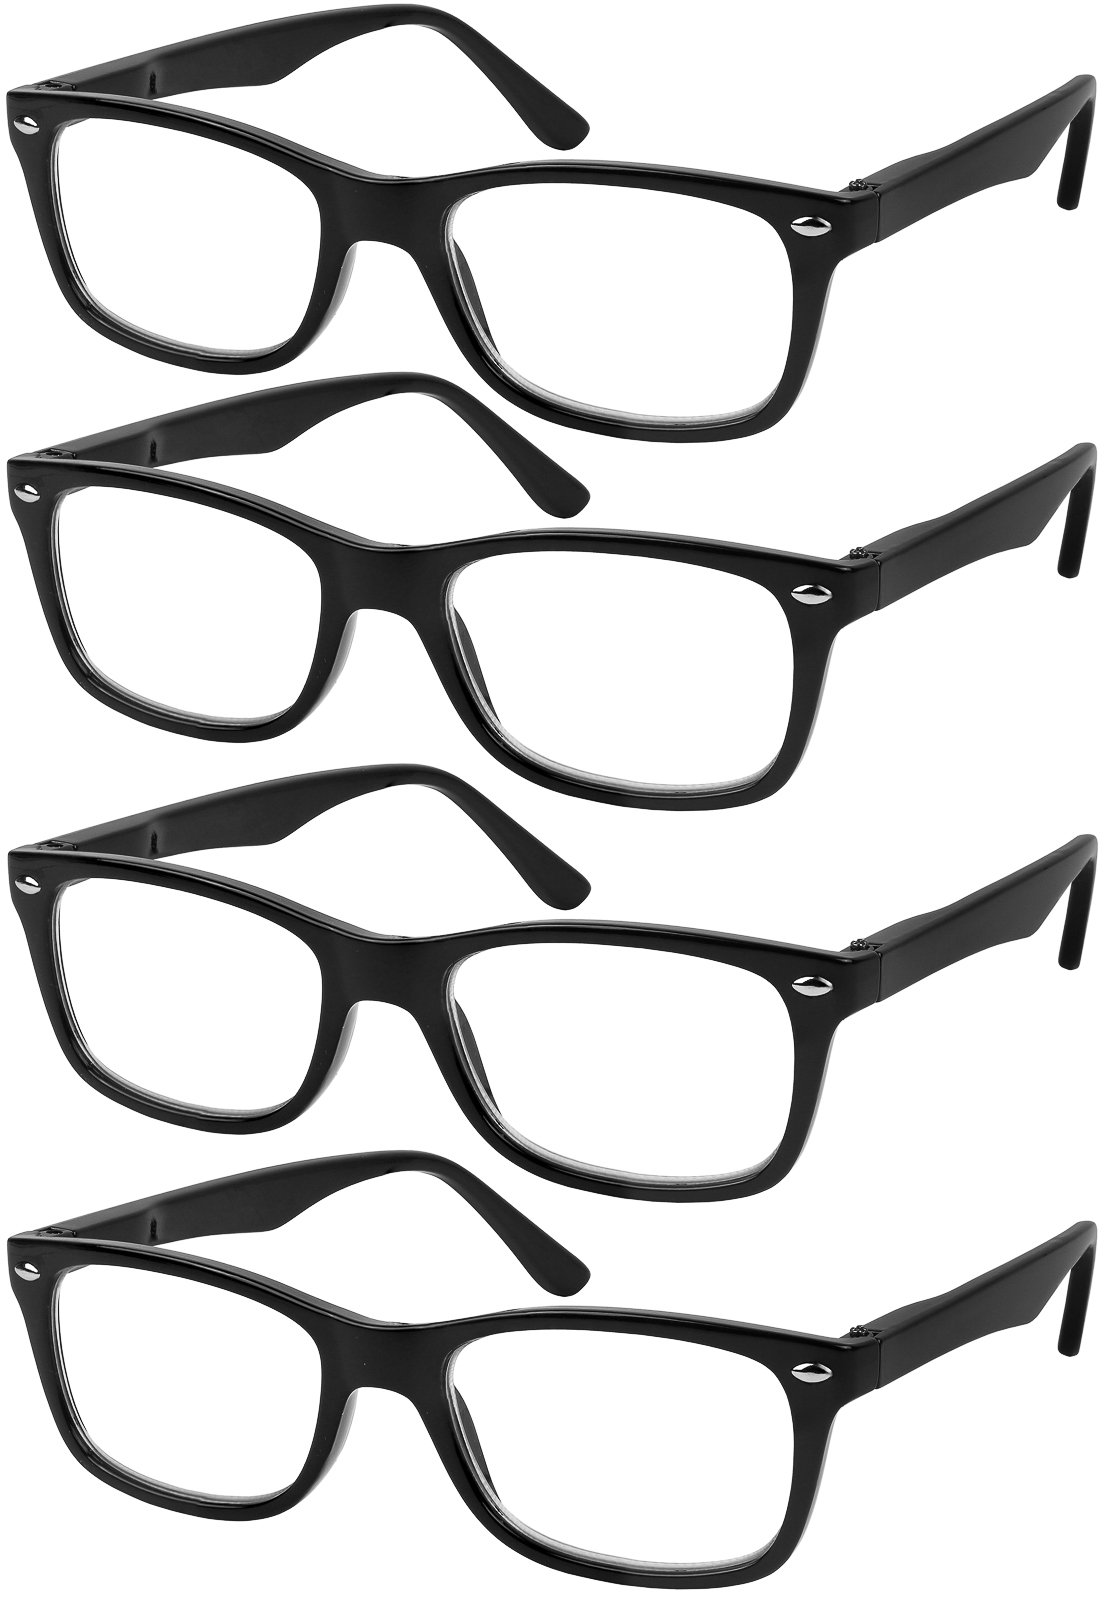 Success Eyewear Reading Glasses Set of 4 Black Quality Readers Spring Hinge Glasses for Reading for Men and Women